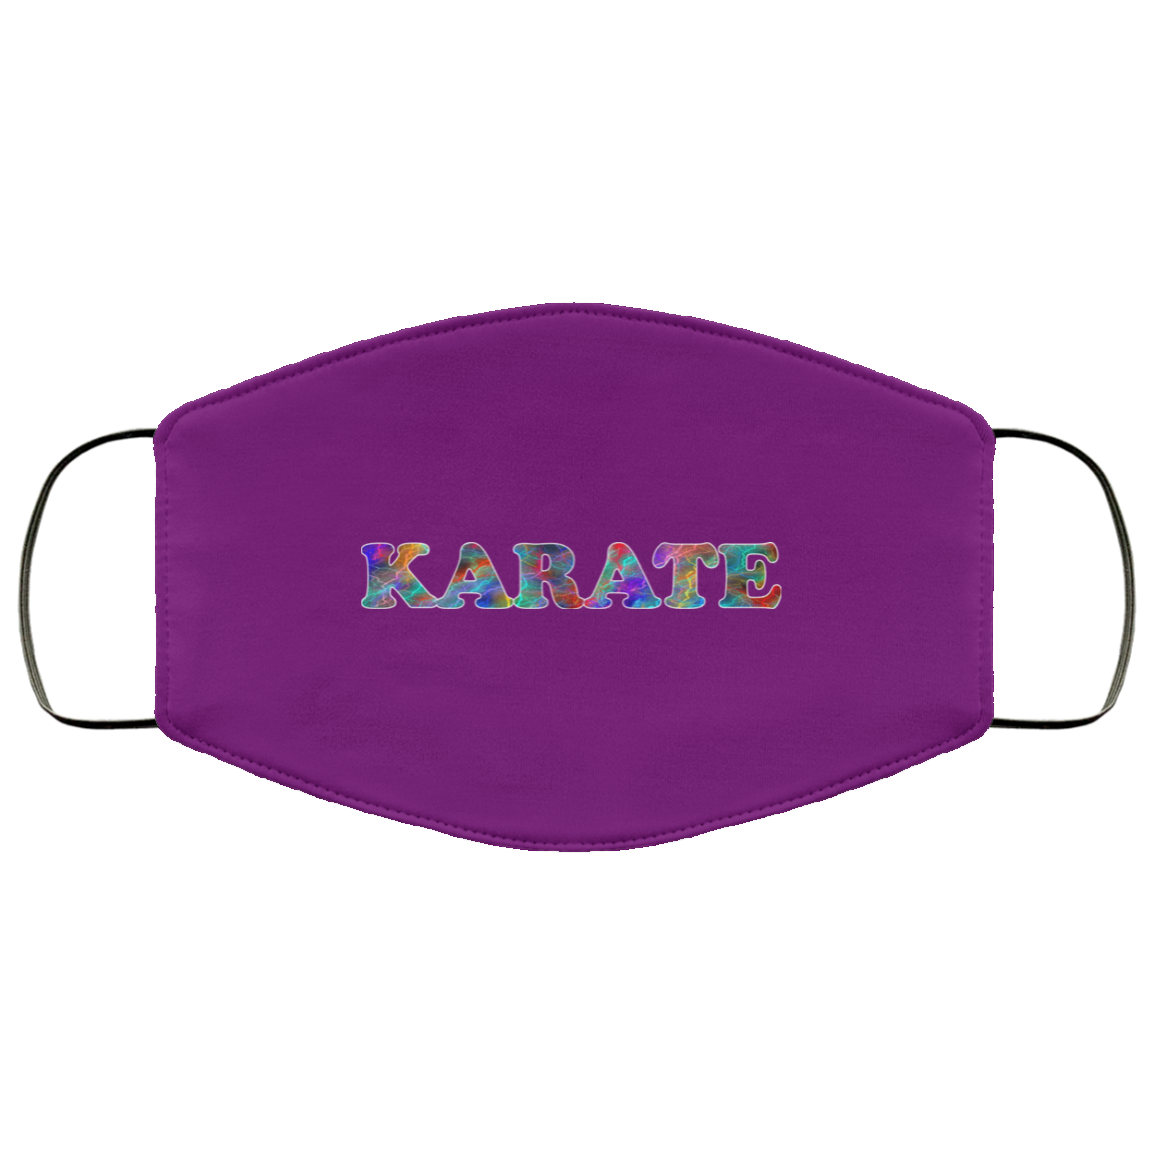 Karate 2 Layer Protective Mask